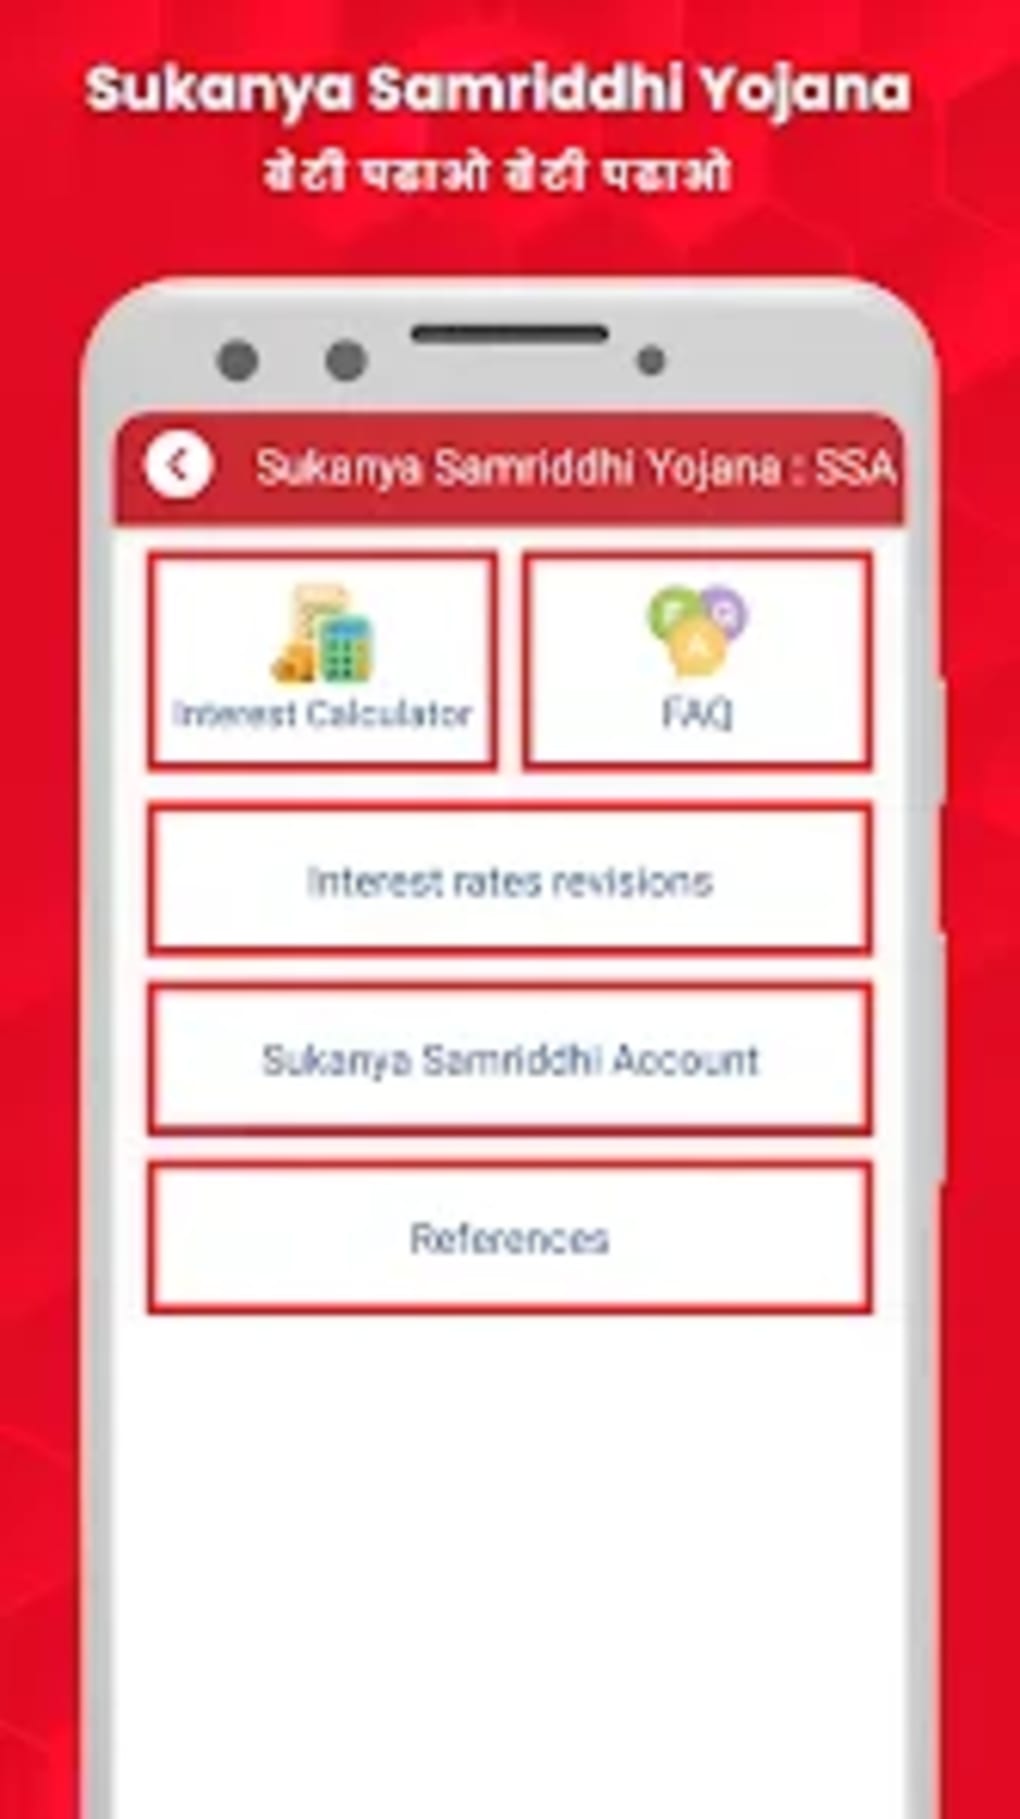 sukanya-samriddhi-yojana-ssy-pour-android-t-l-charger